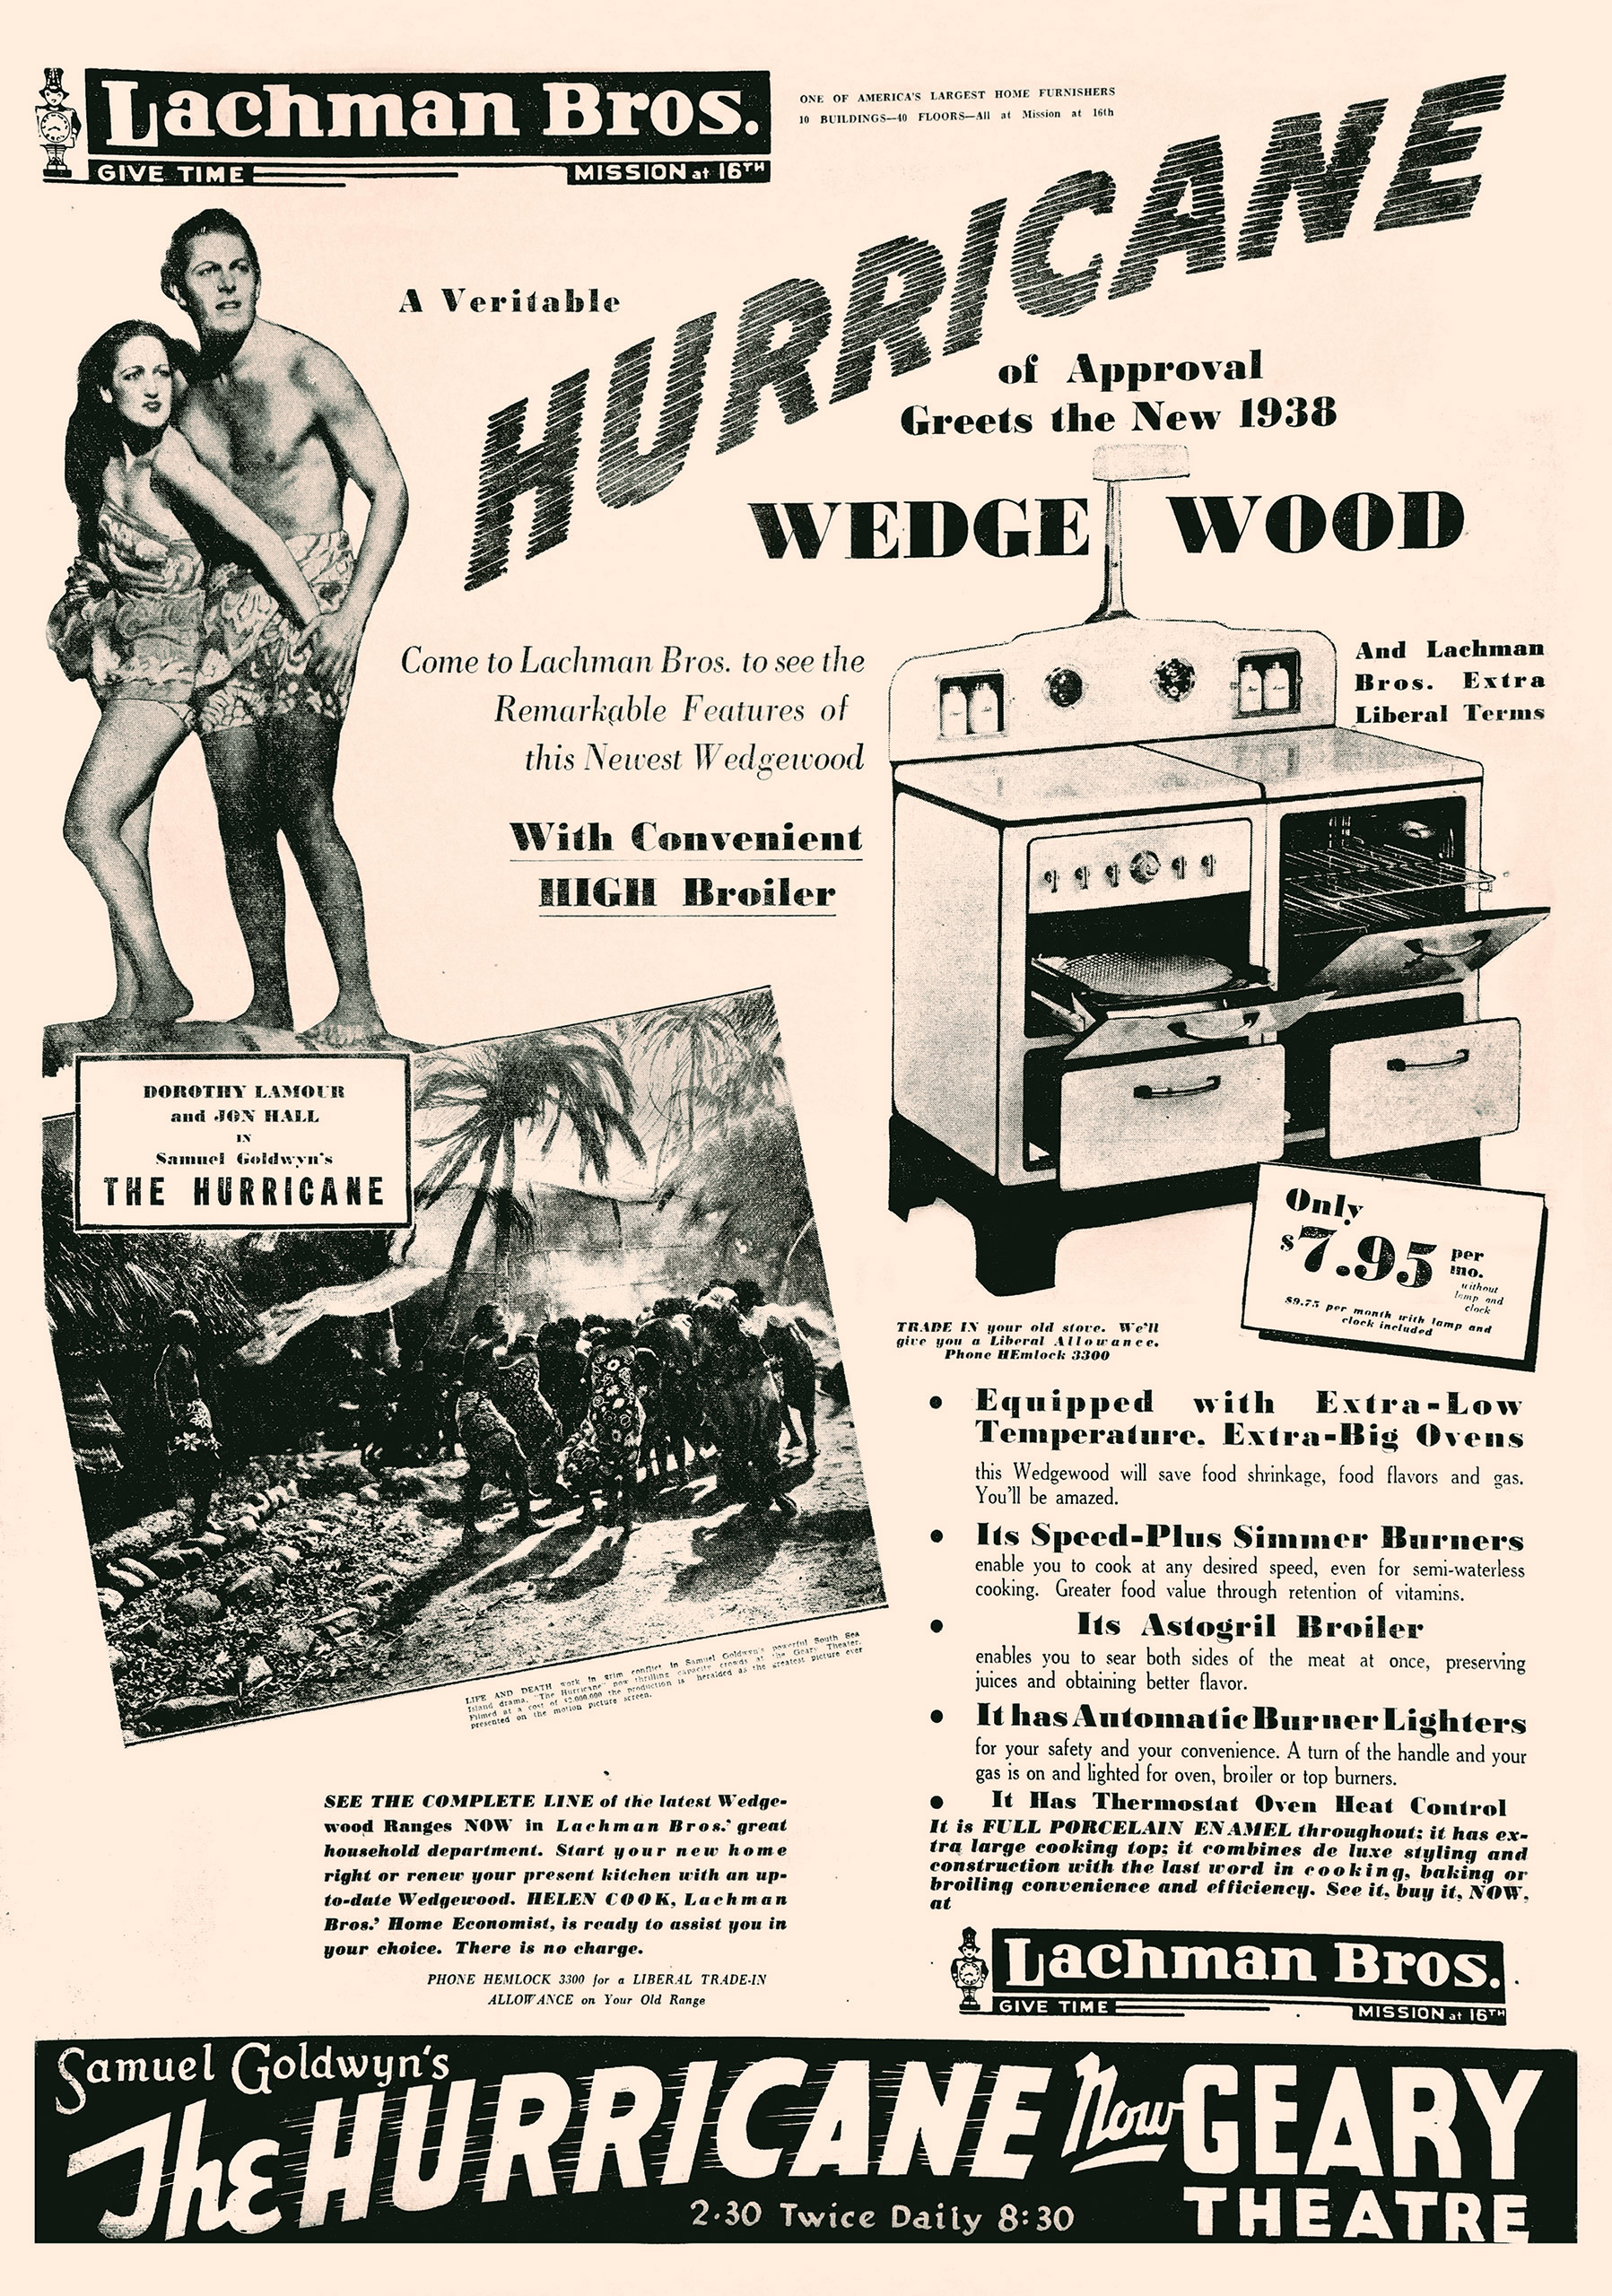 The Hurricane newspaper advertisement, 1937.